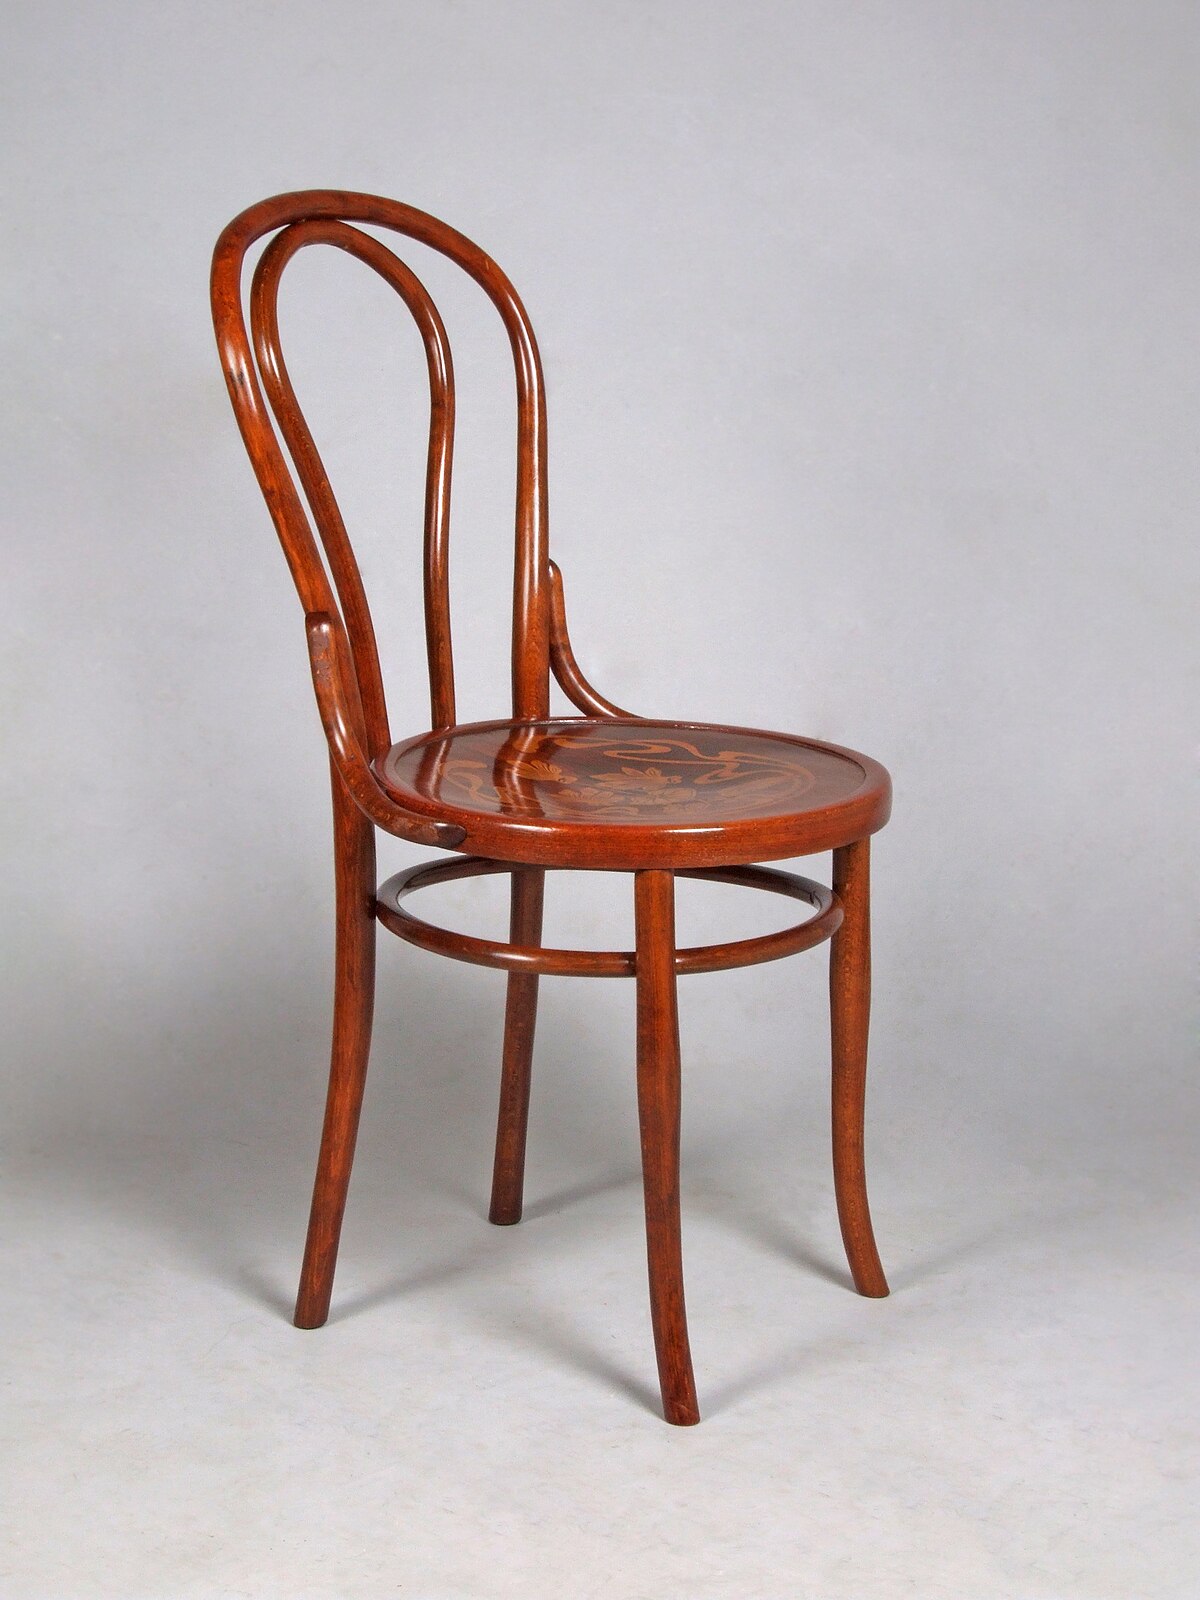 File:Thonet chair no.18.jpg - Wikimedia Commons